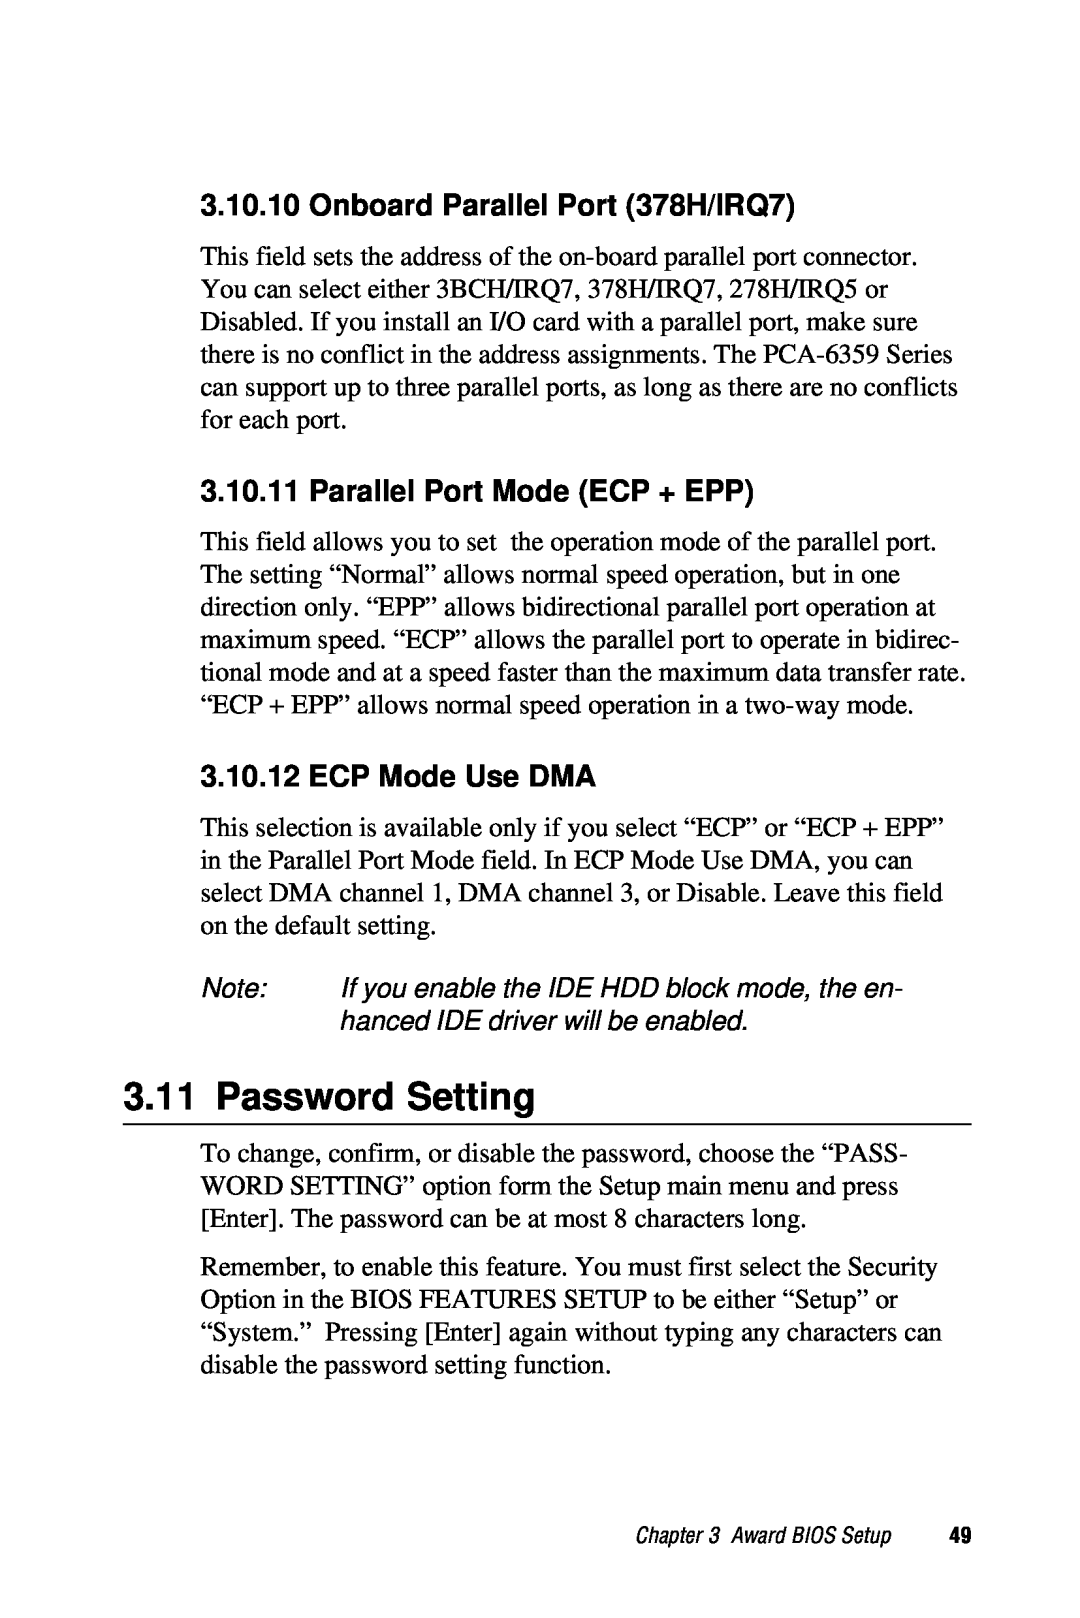 Advantech PCA-6359 Password Setting, Onboard Parallel Port 378H/IRQ7, Parallel Port Mode ECP + EPP, ECP Mode Use DMA 